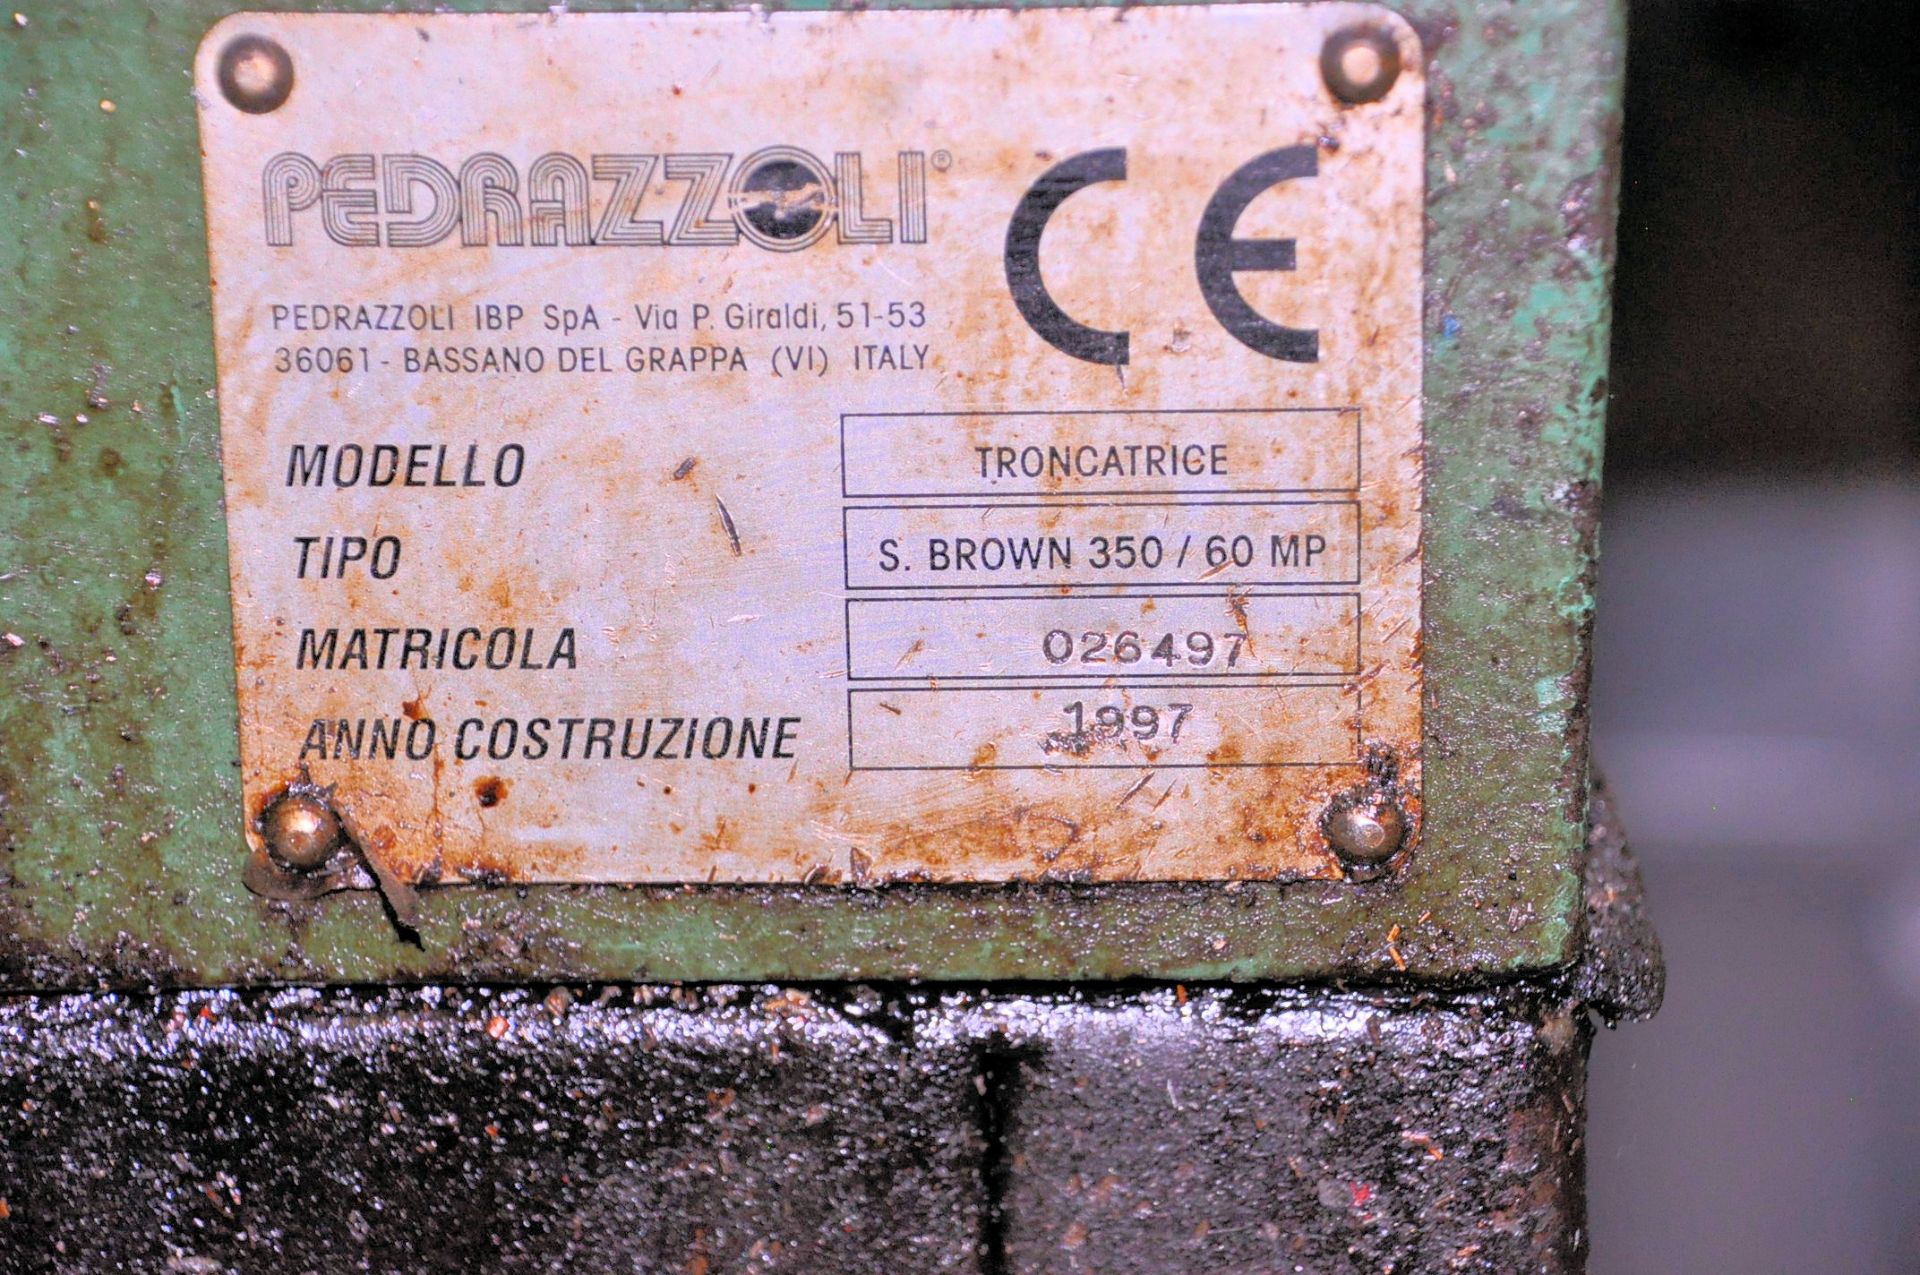 Pedrazzoli Model Troncatrice, Type 350/60MP, 14" Cold Cutoff Saw - Image 4 of 4